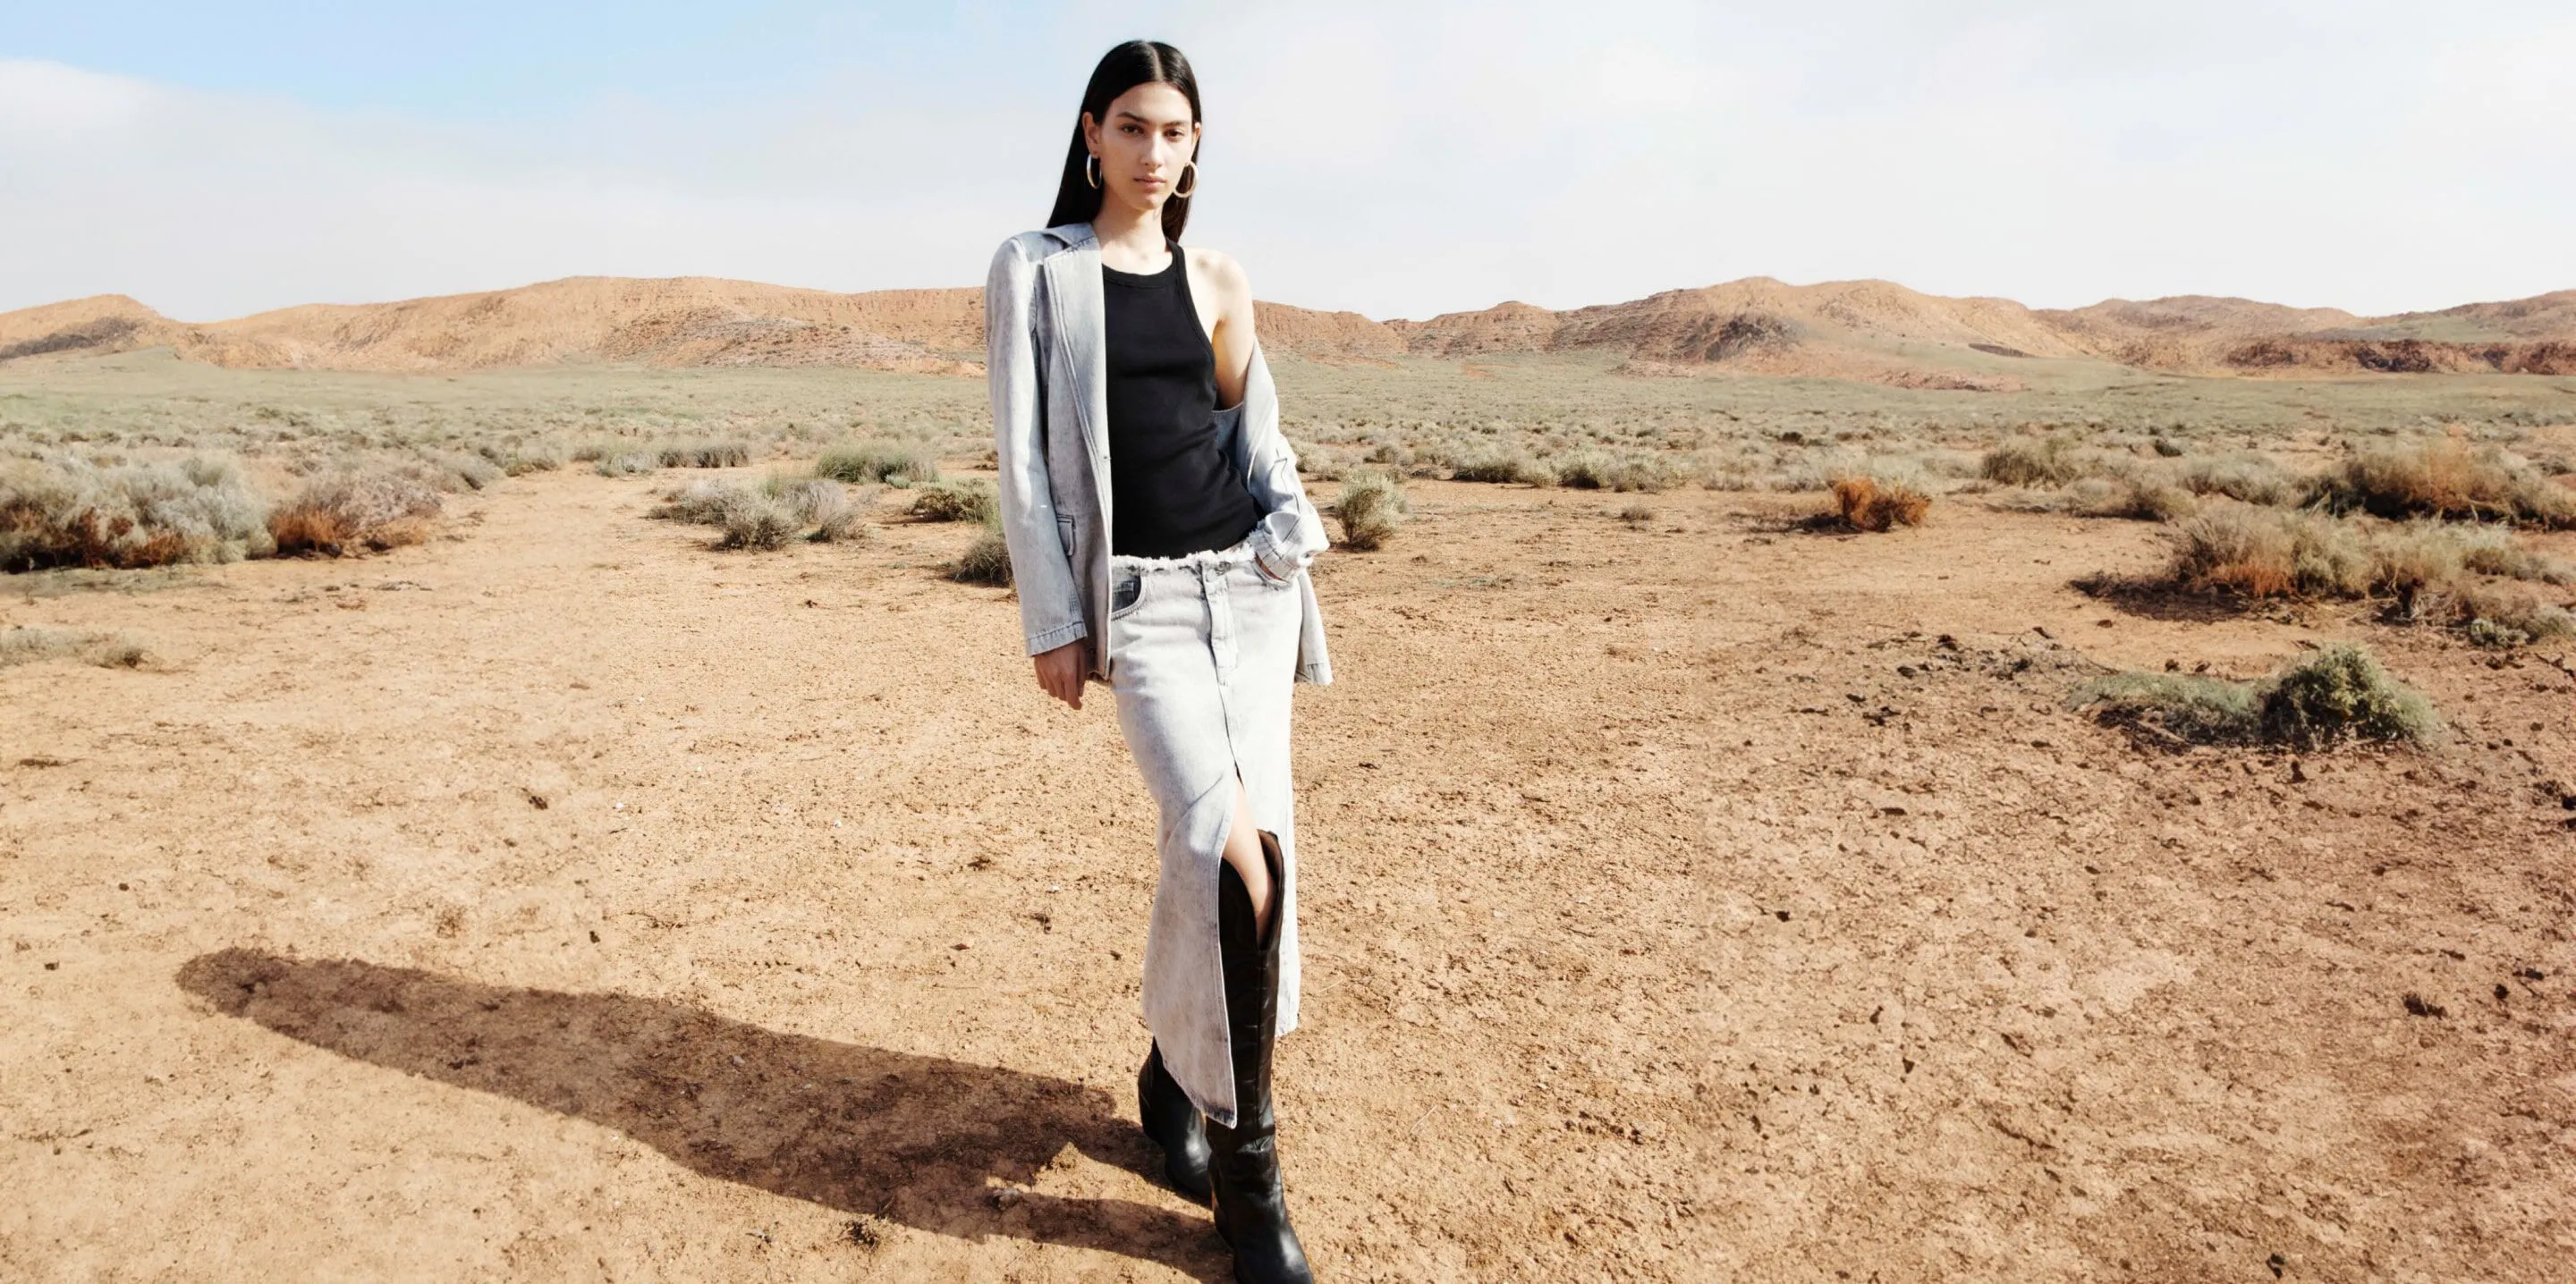 Photograph showing a female model wearing a light denim jacket, light denim skirt and black vest standing in the desert.